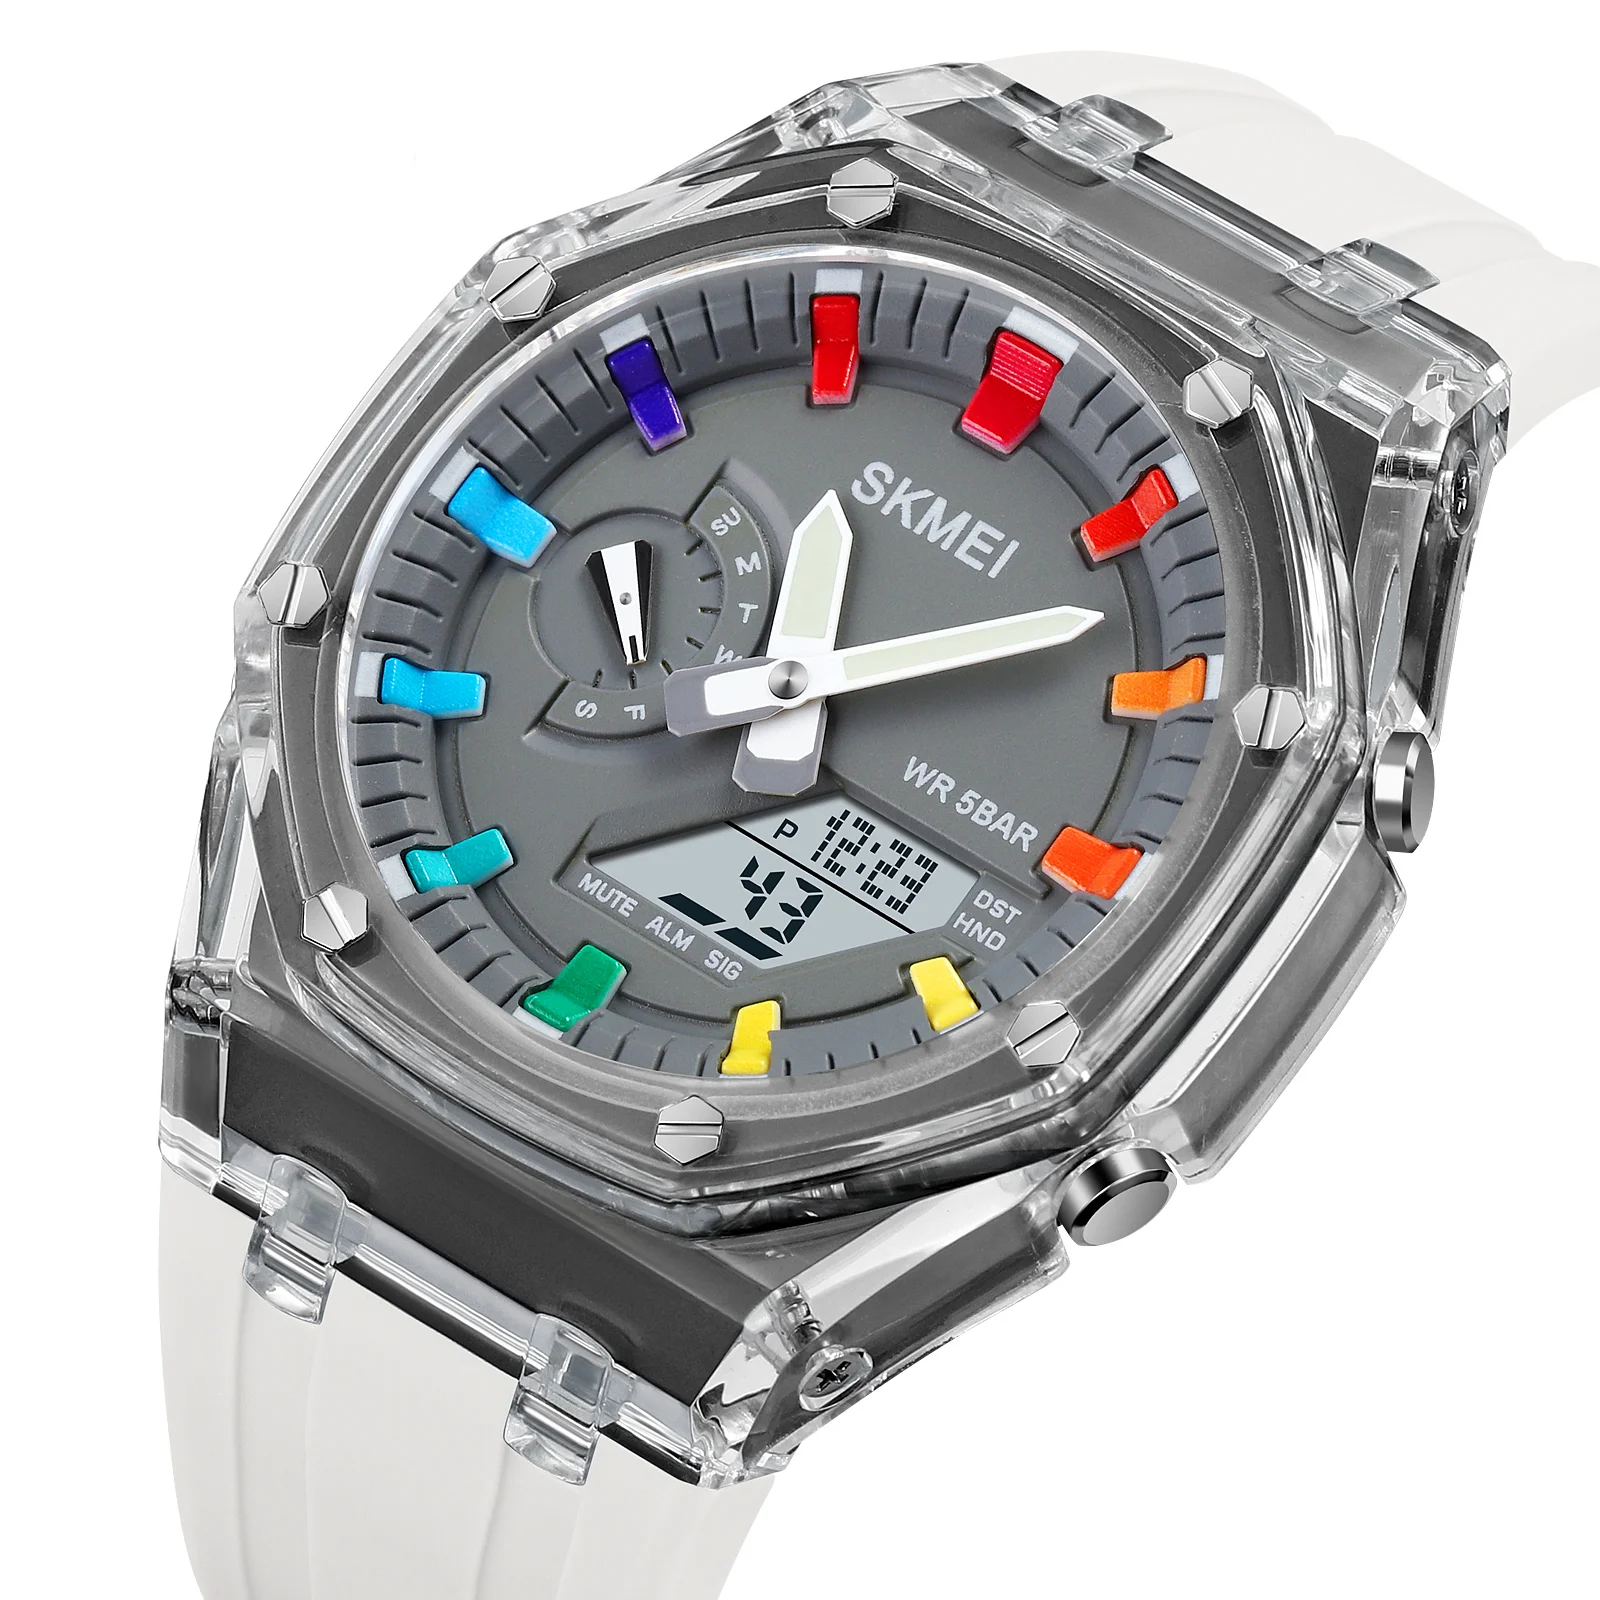 

2100 Outdoor Men Digital Watch Colourful LED Display Watches Waterproof Shock Resistant Mens Wristwatch Clock reloj hombre